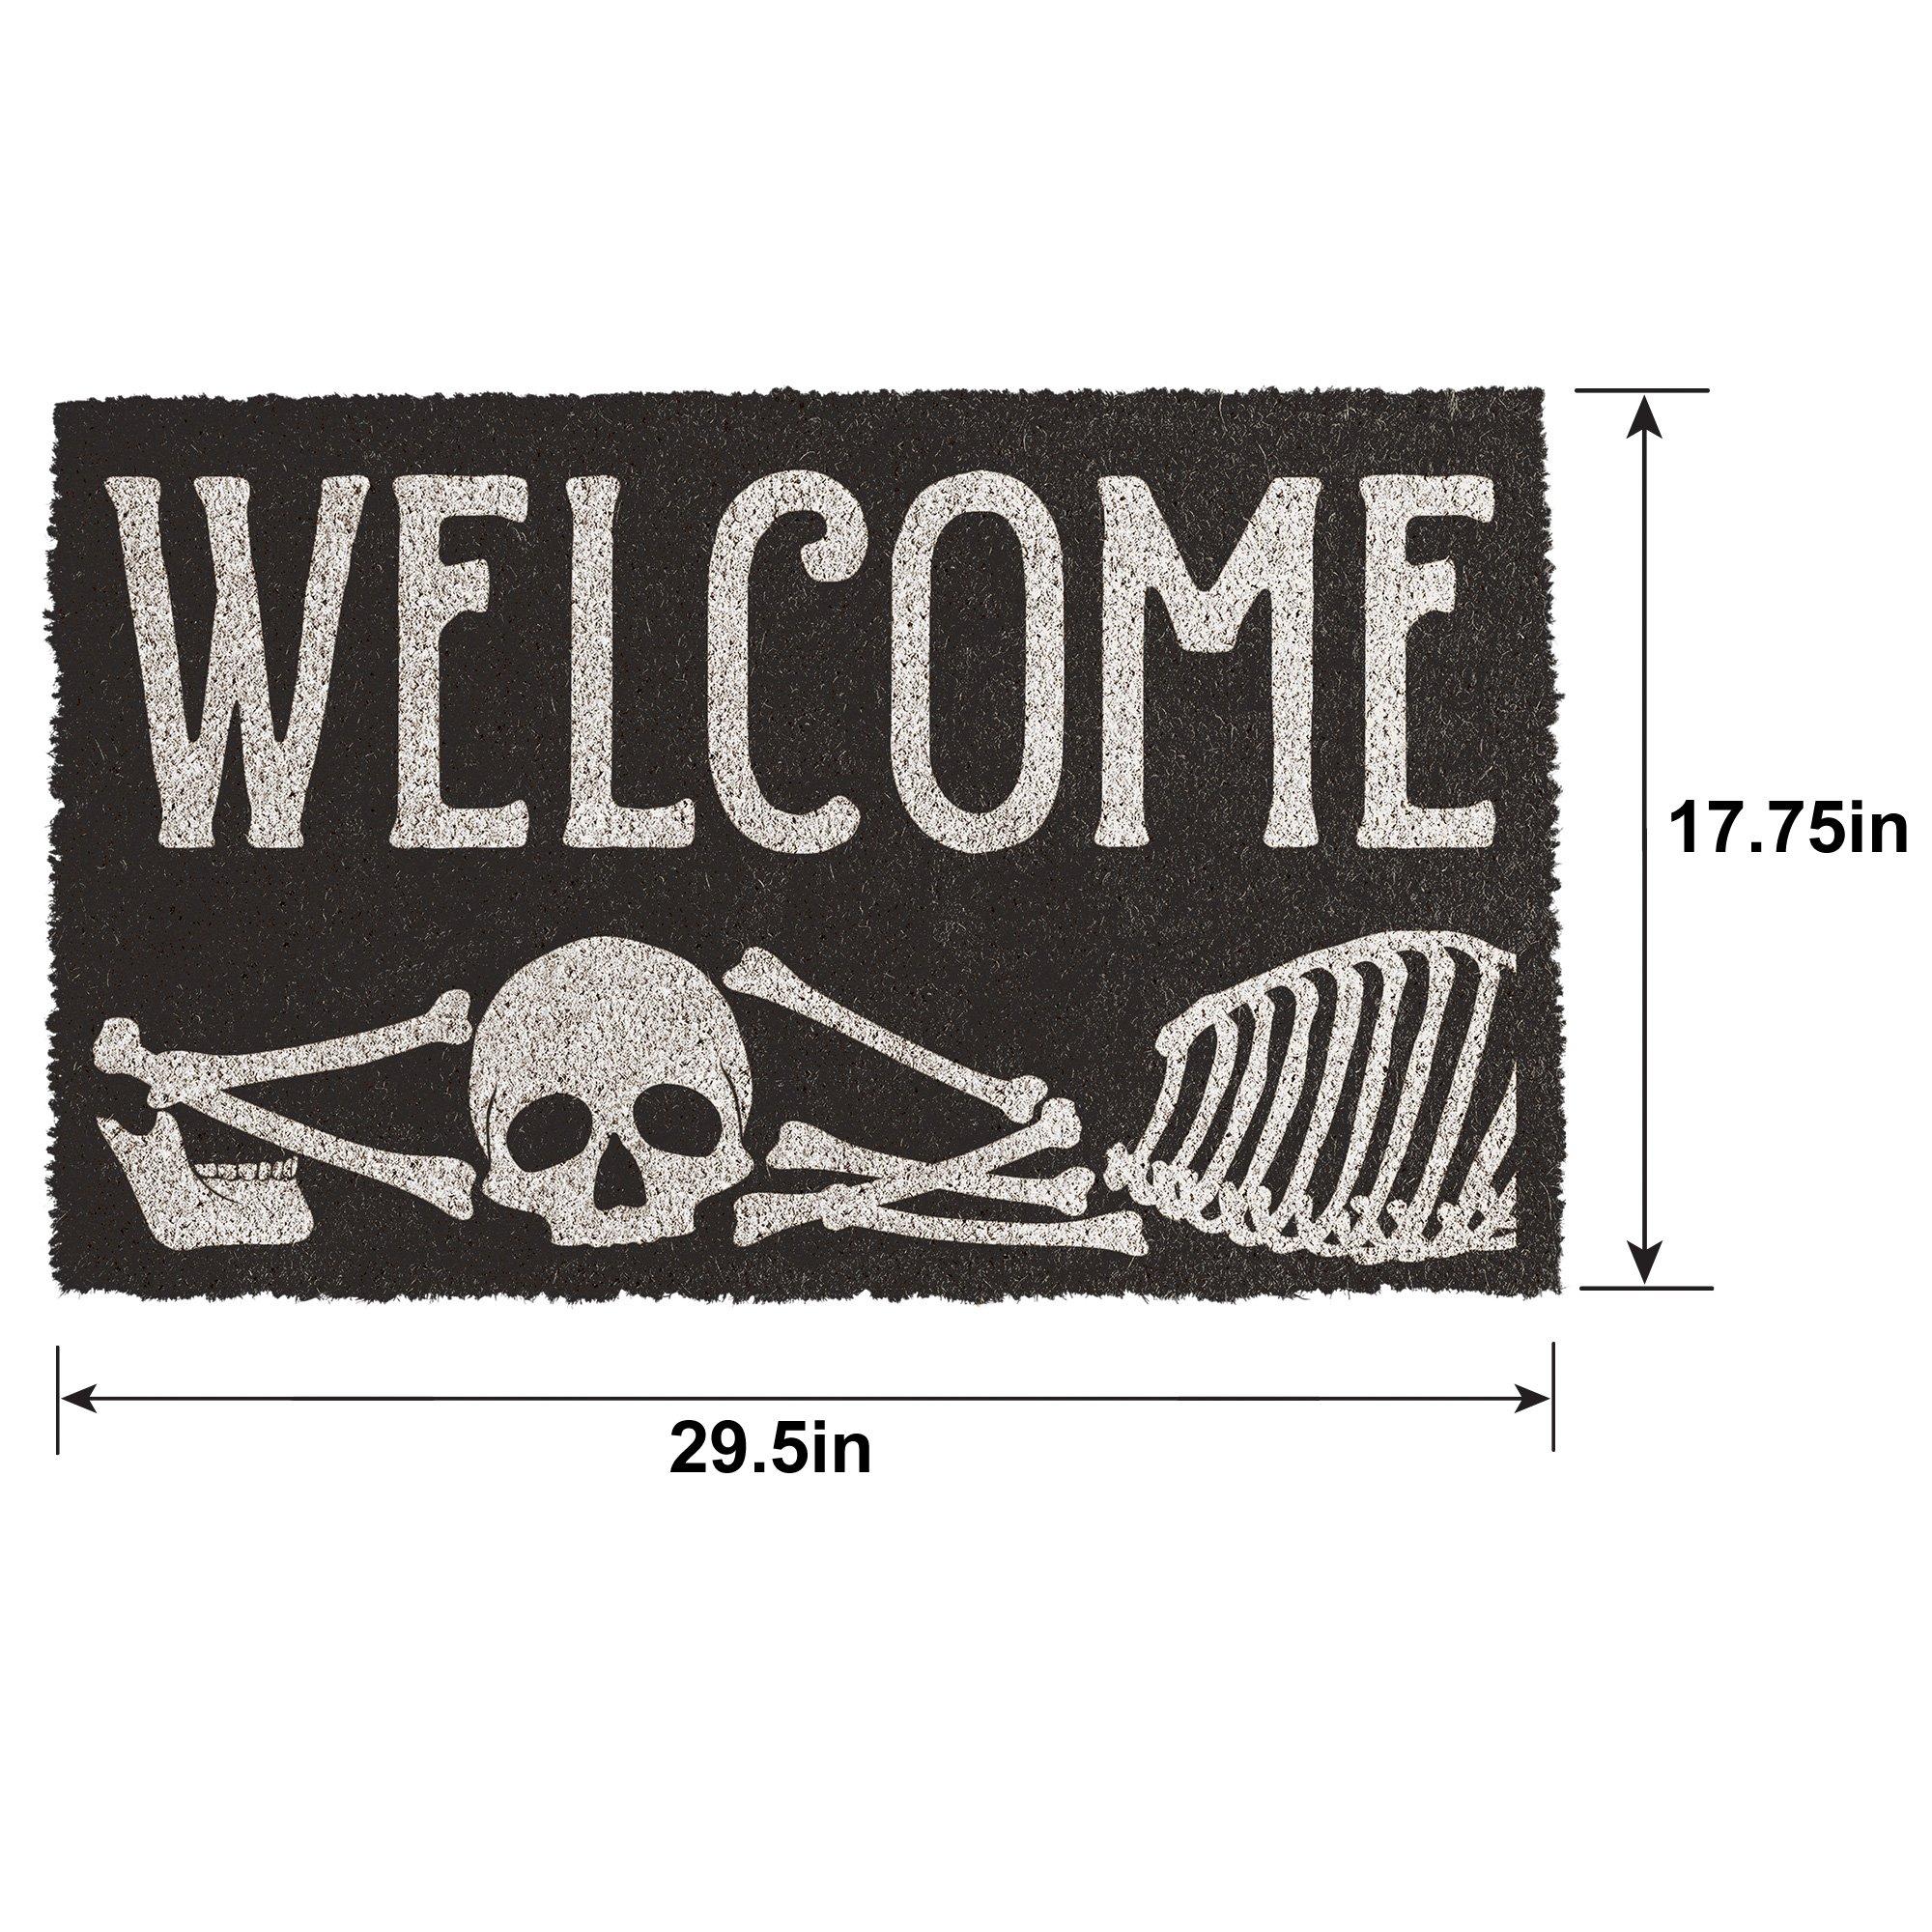 Superio Victorian Gate Coir Welcome Doormat - Black